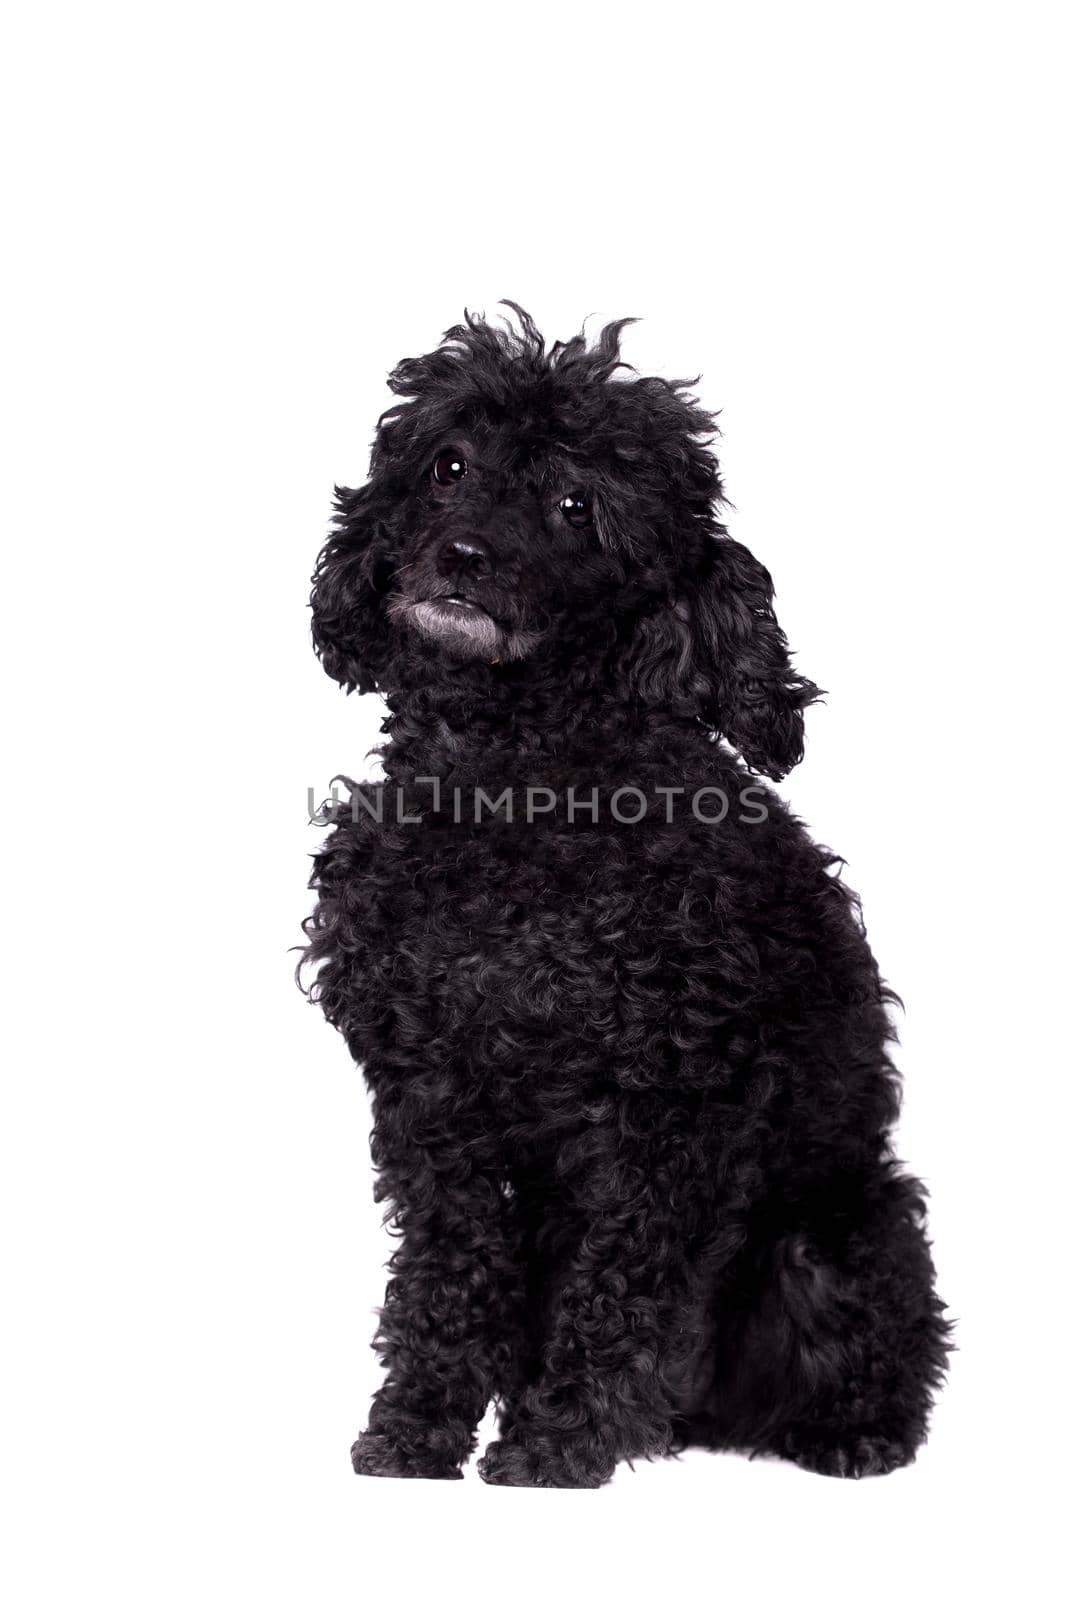 Black poodle dog on white by RosaJay